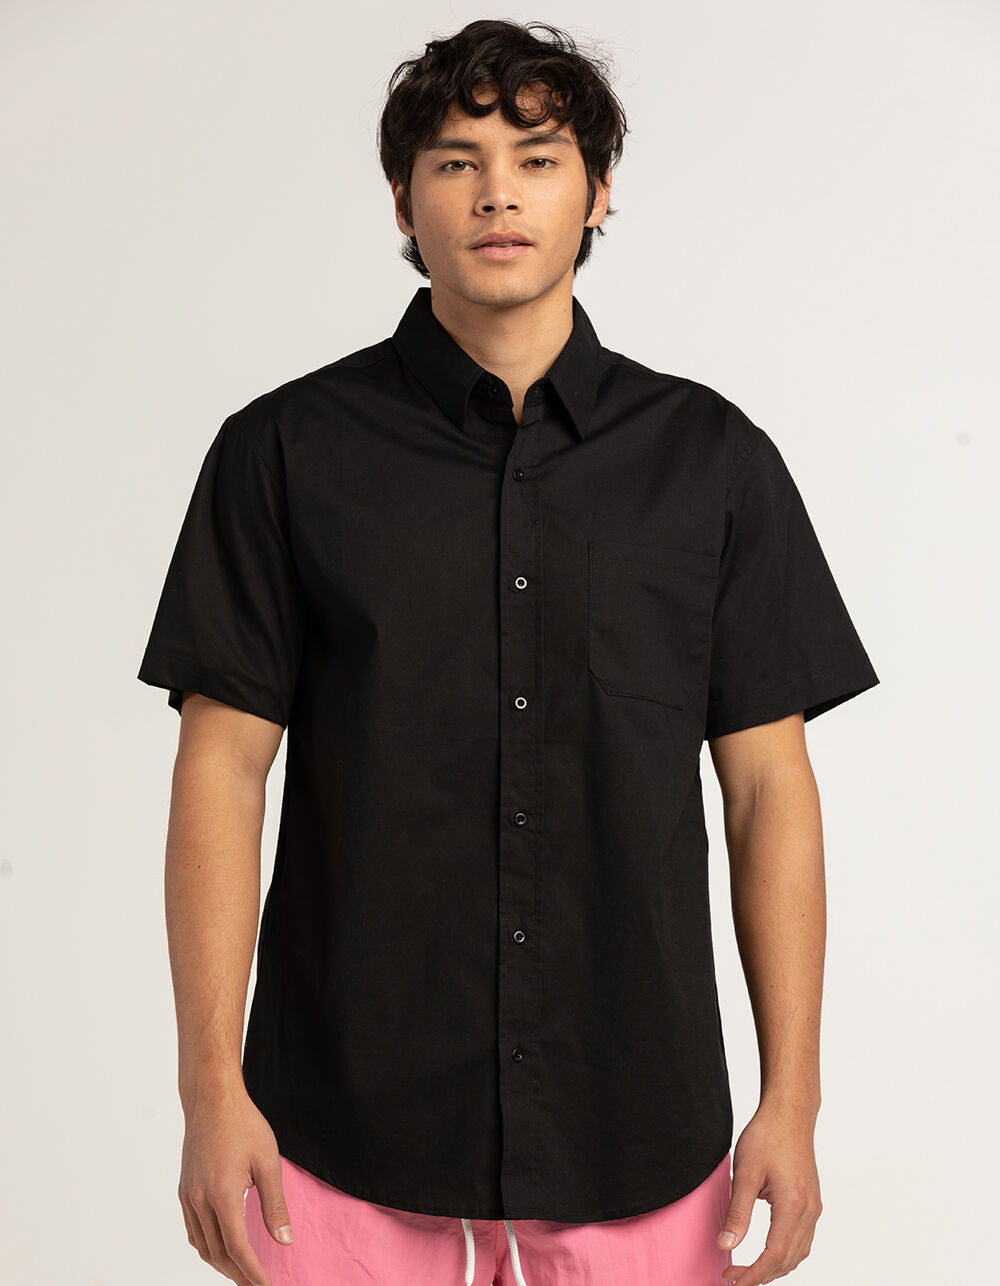 Rsq Solid Button Up Shirt - Black - Medium